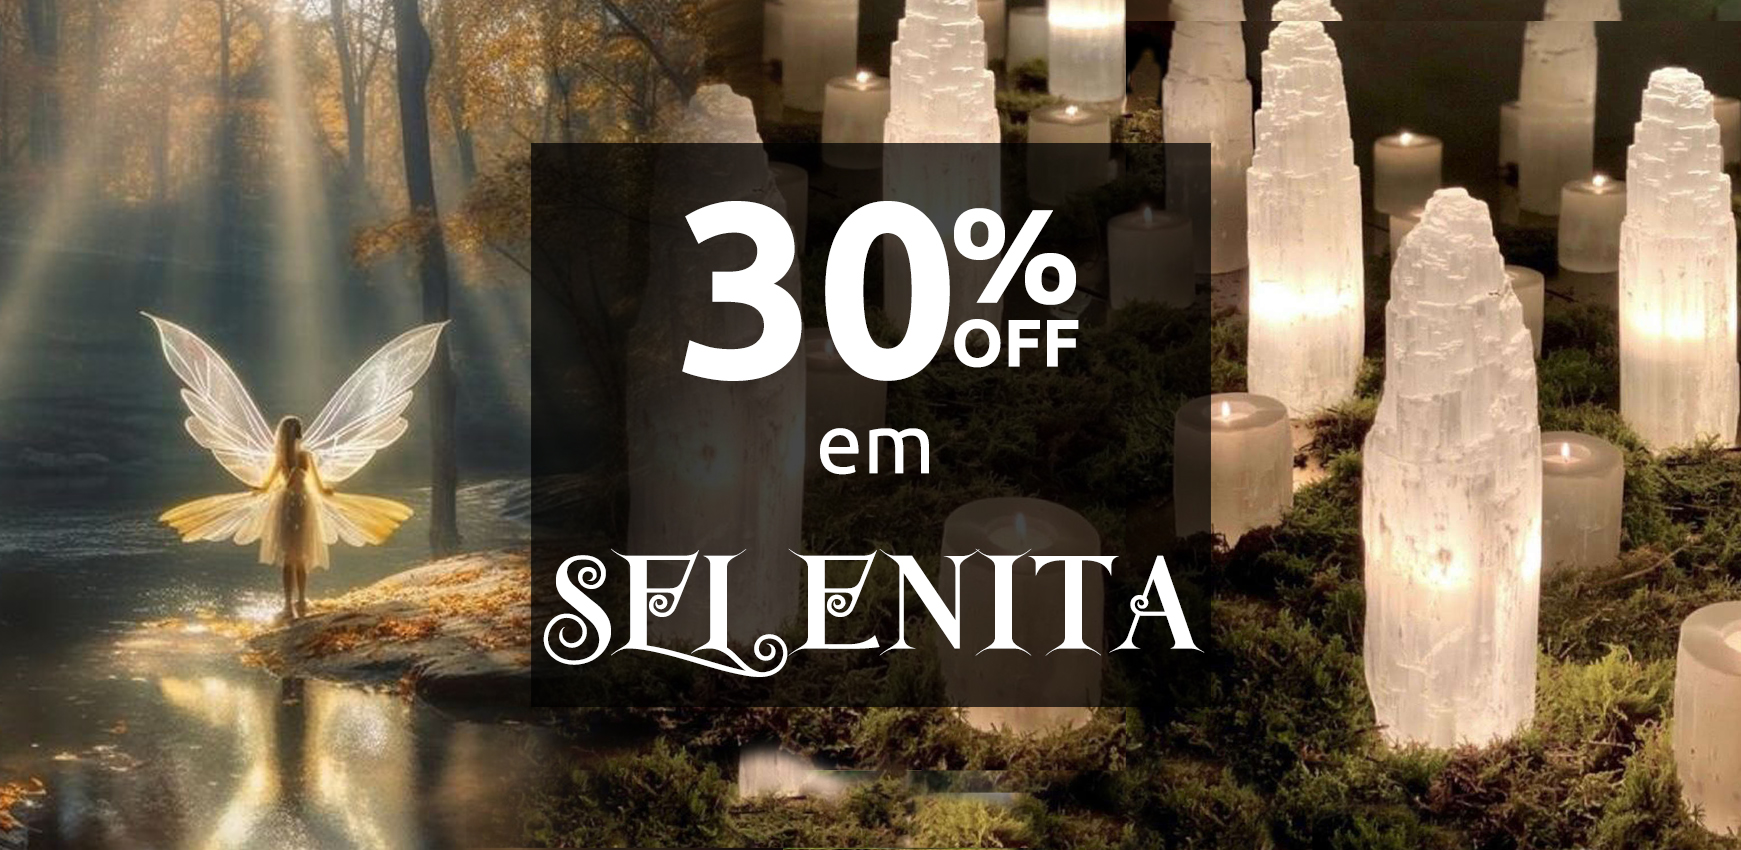 30%OFF em Selenita!